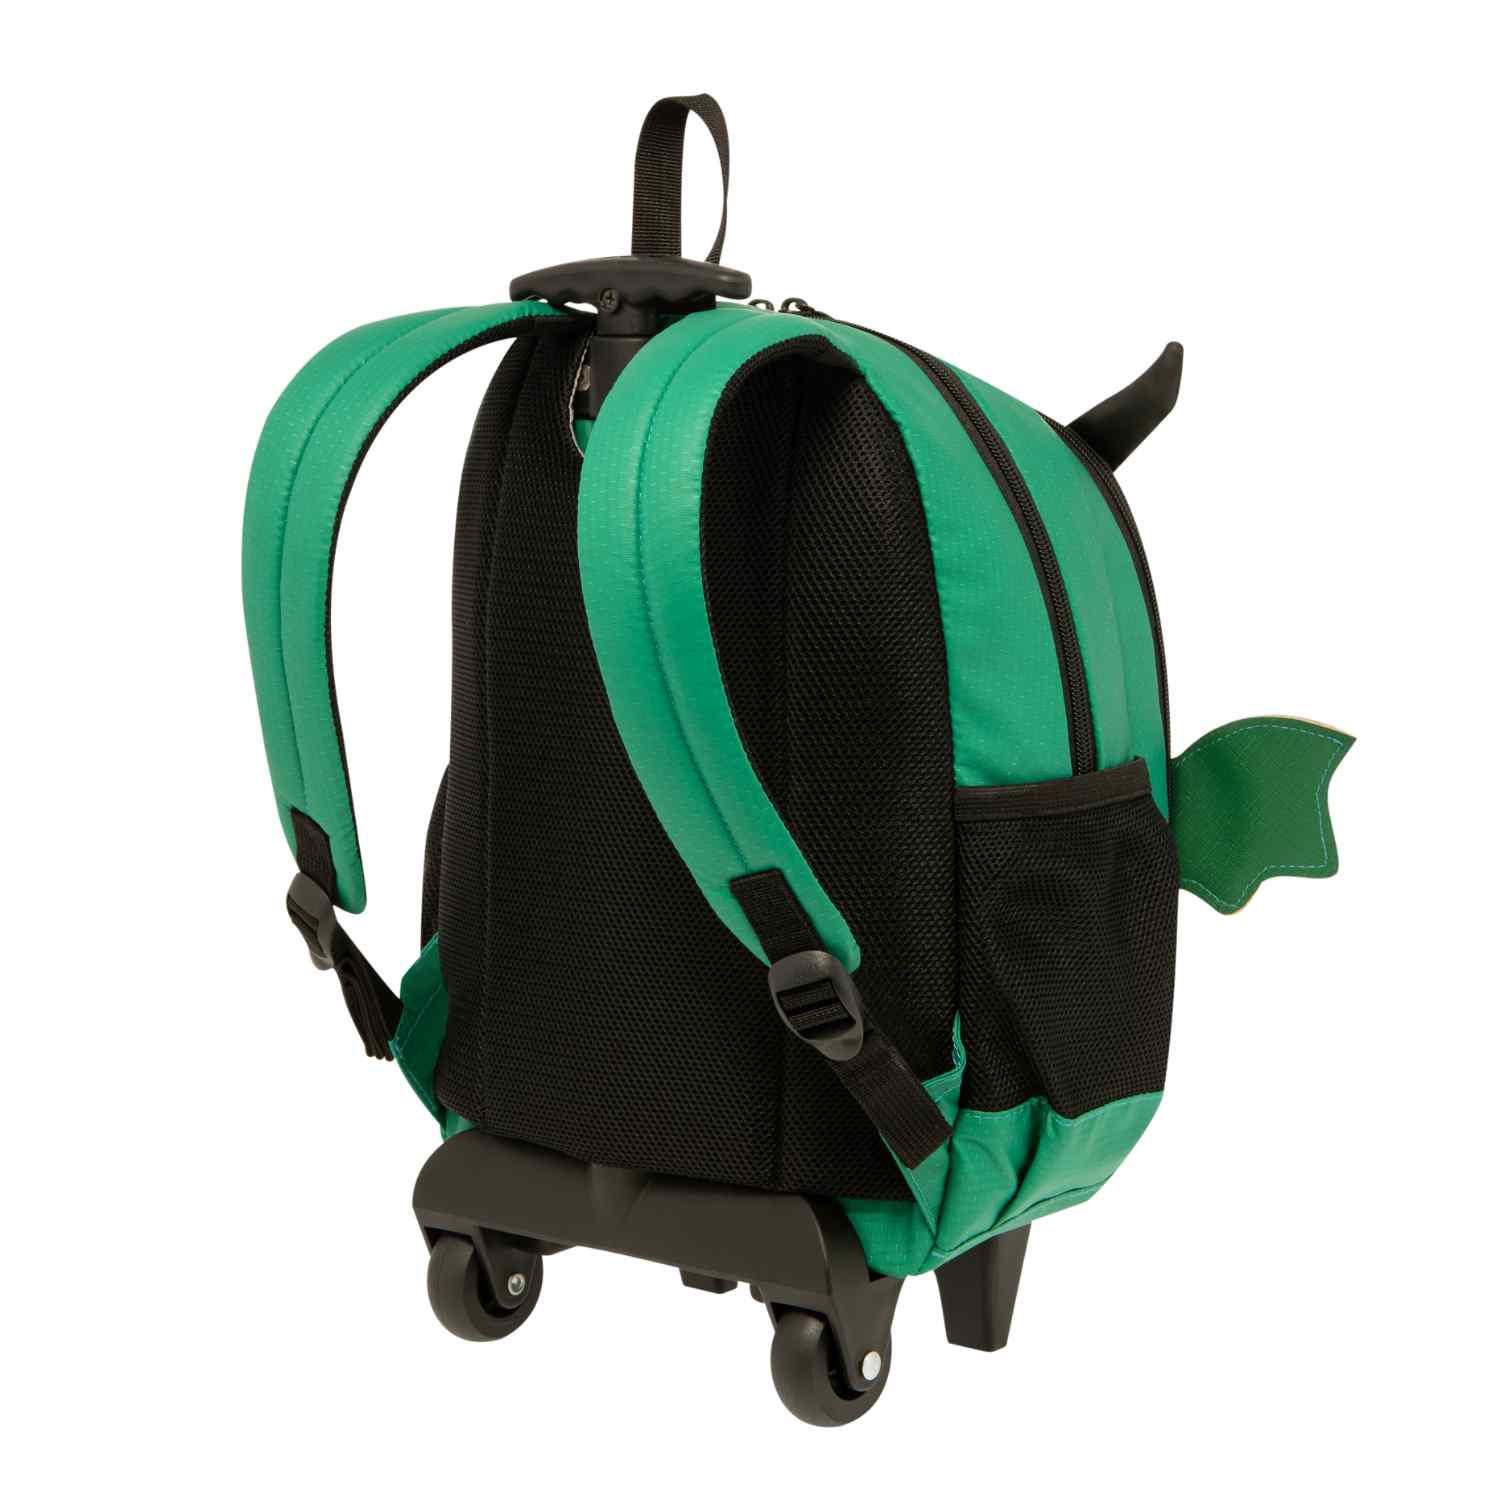 POLO - Polo TROLLEY JUNIOR LITTLE Trolley Bag Σχολική Τσάντα Τρόλευ Νηπίου Χρώμα Πράσινο Μ25 x Π16 x Υ34cm 9-01-039-8228